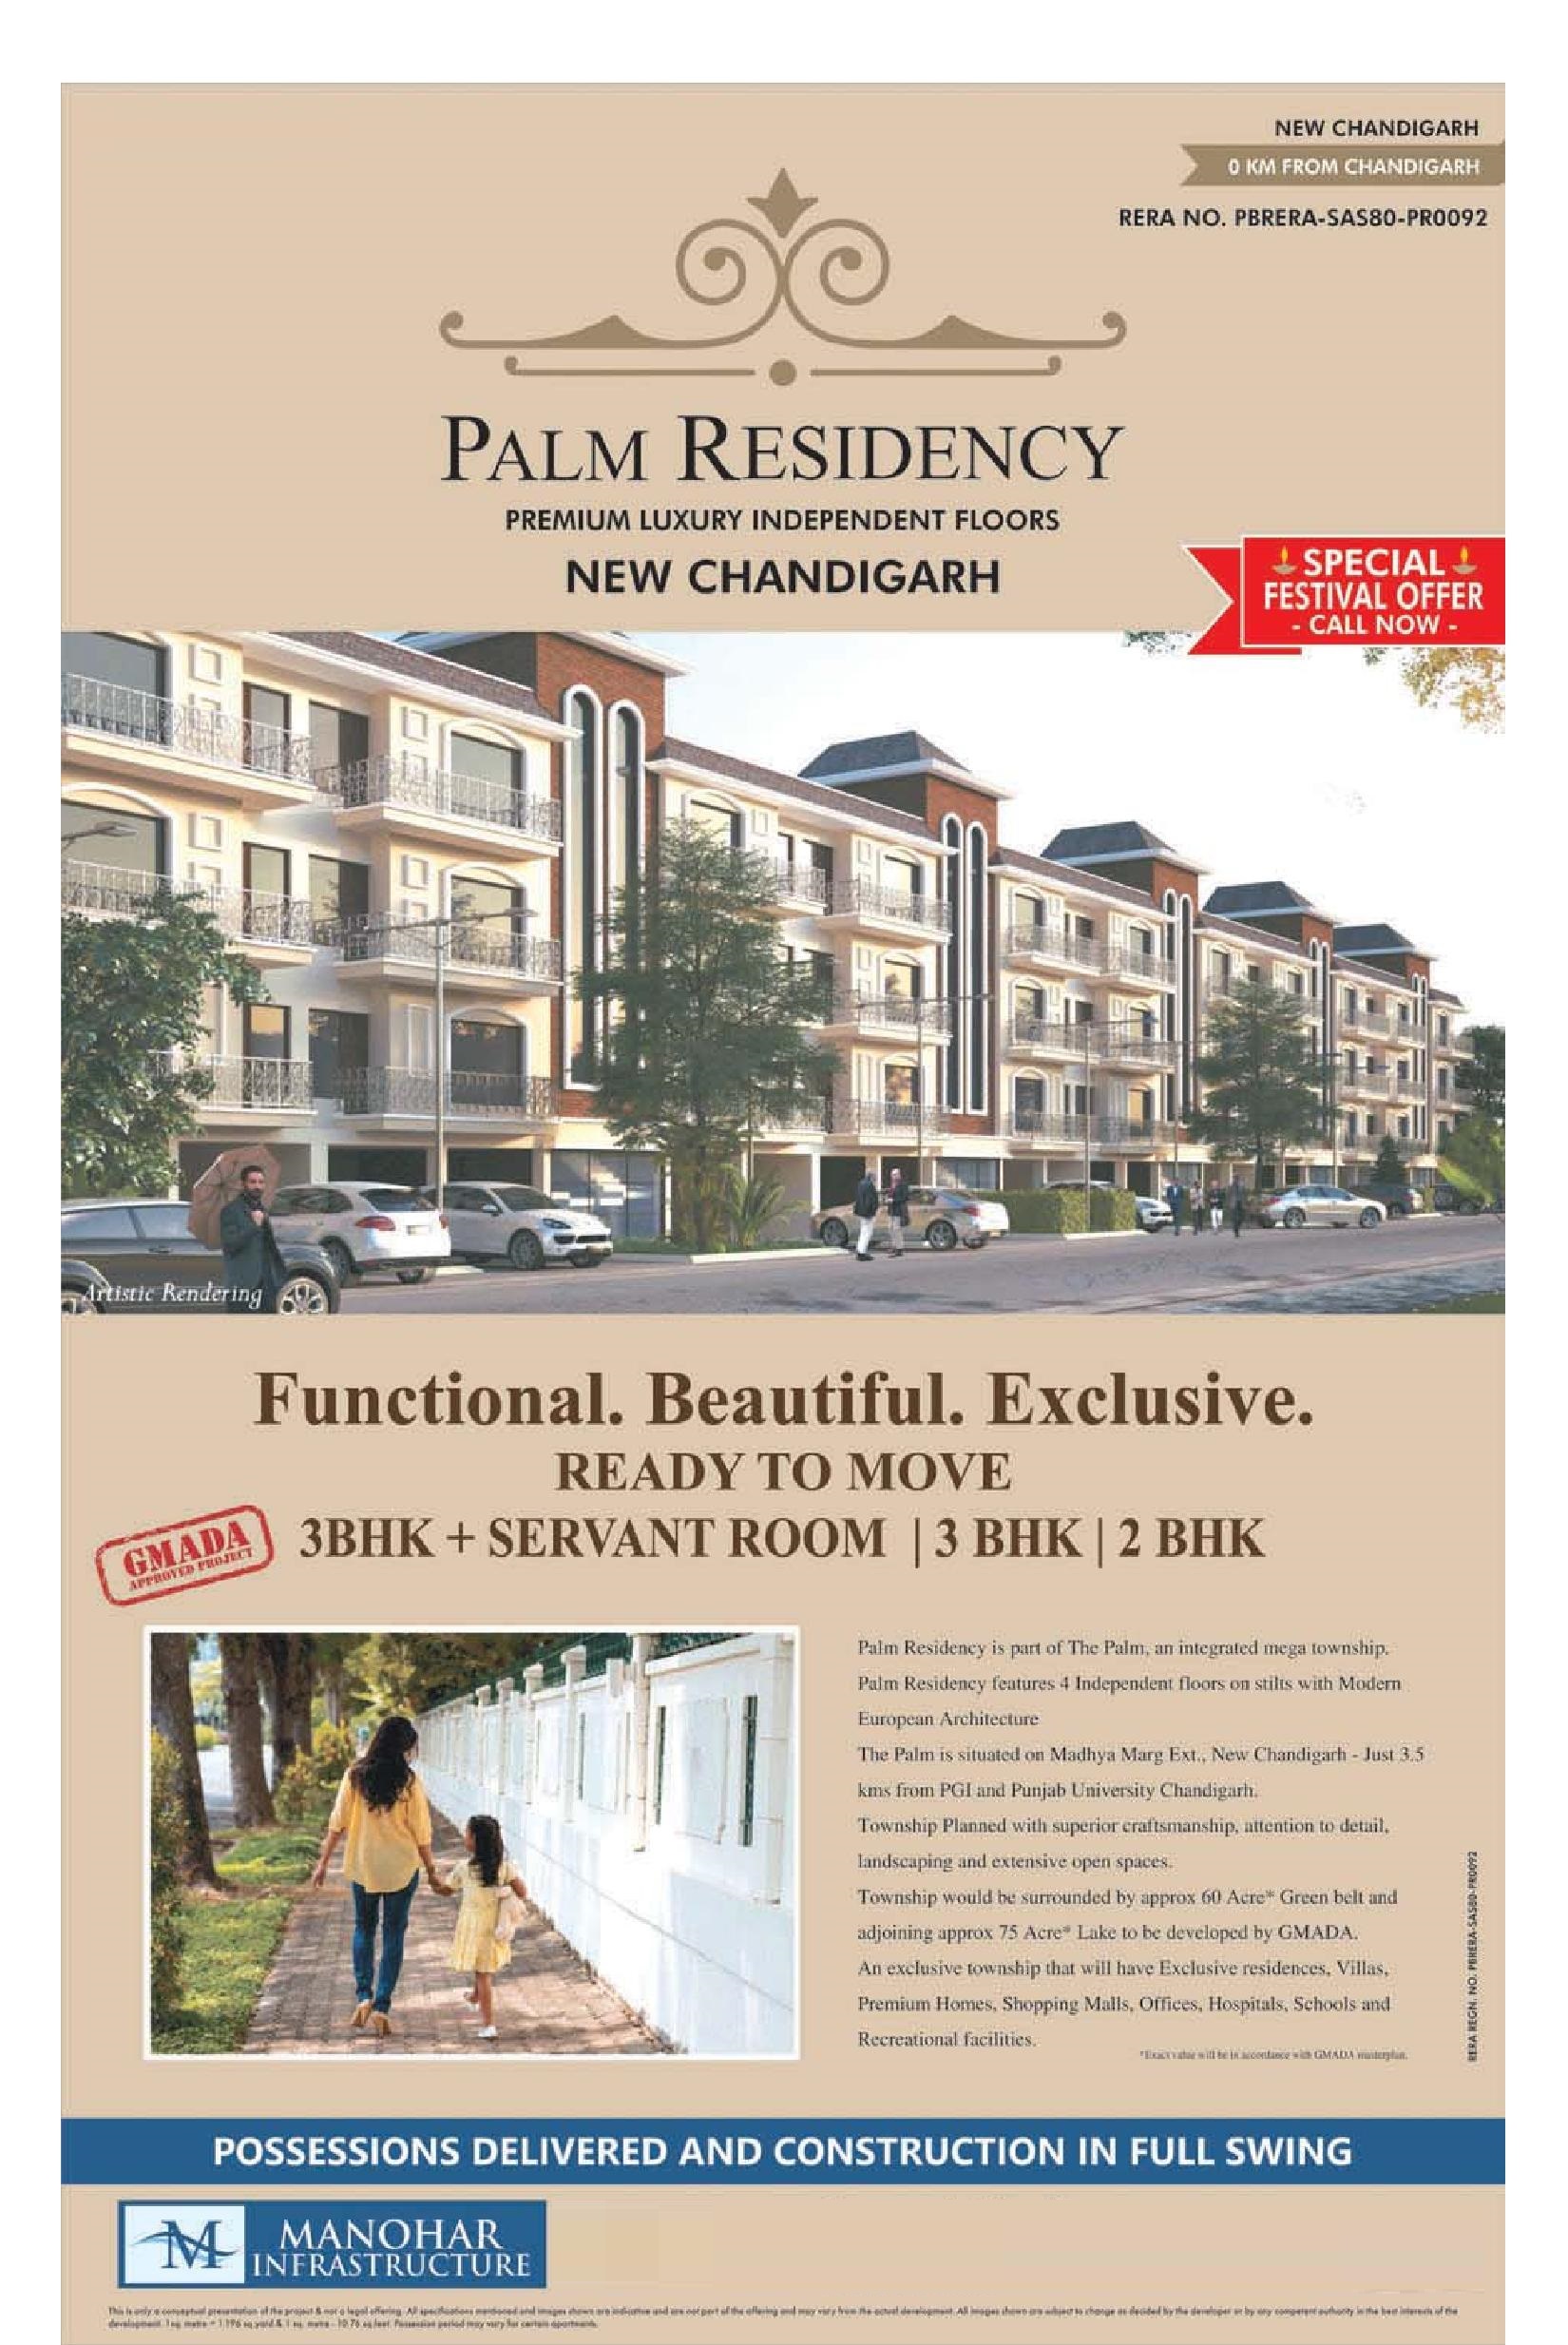 Manohar Palm Residency launching premium luxury independent floors in New Chandigarh